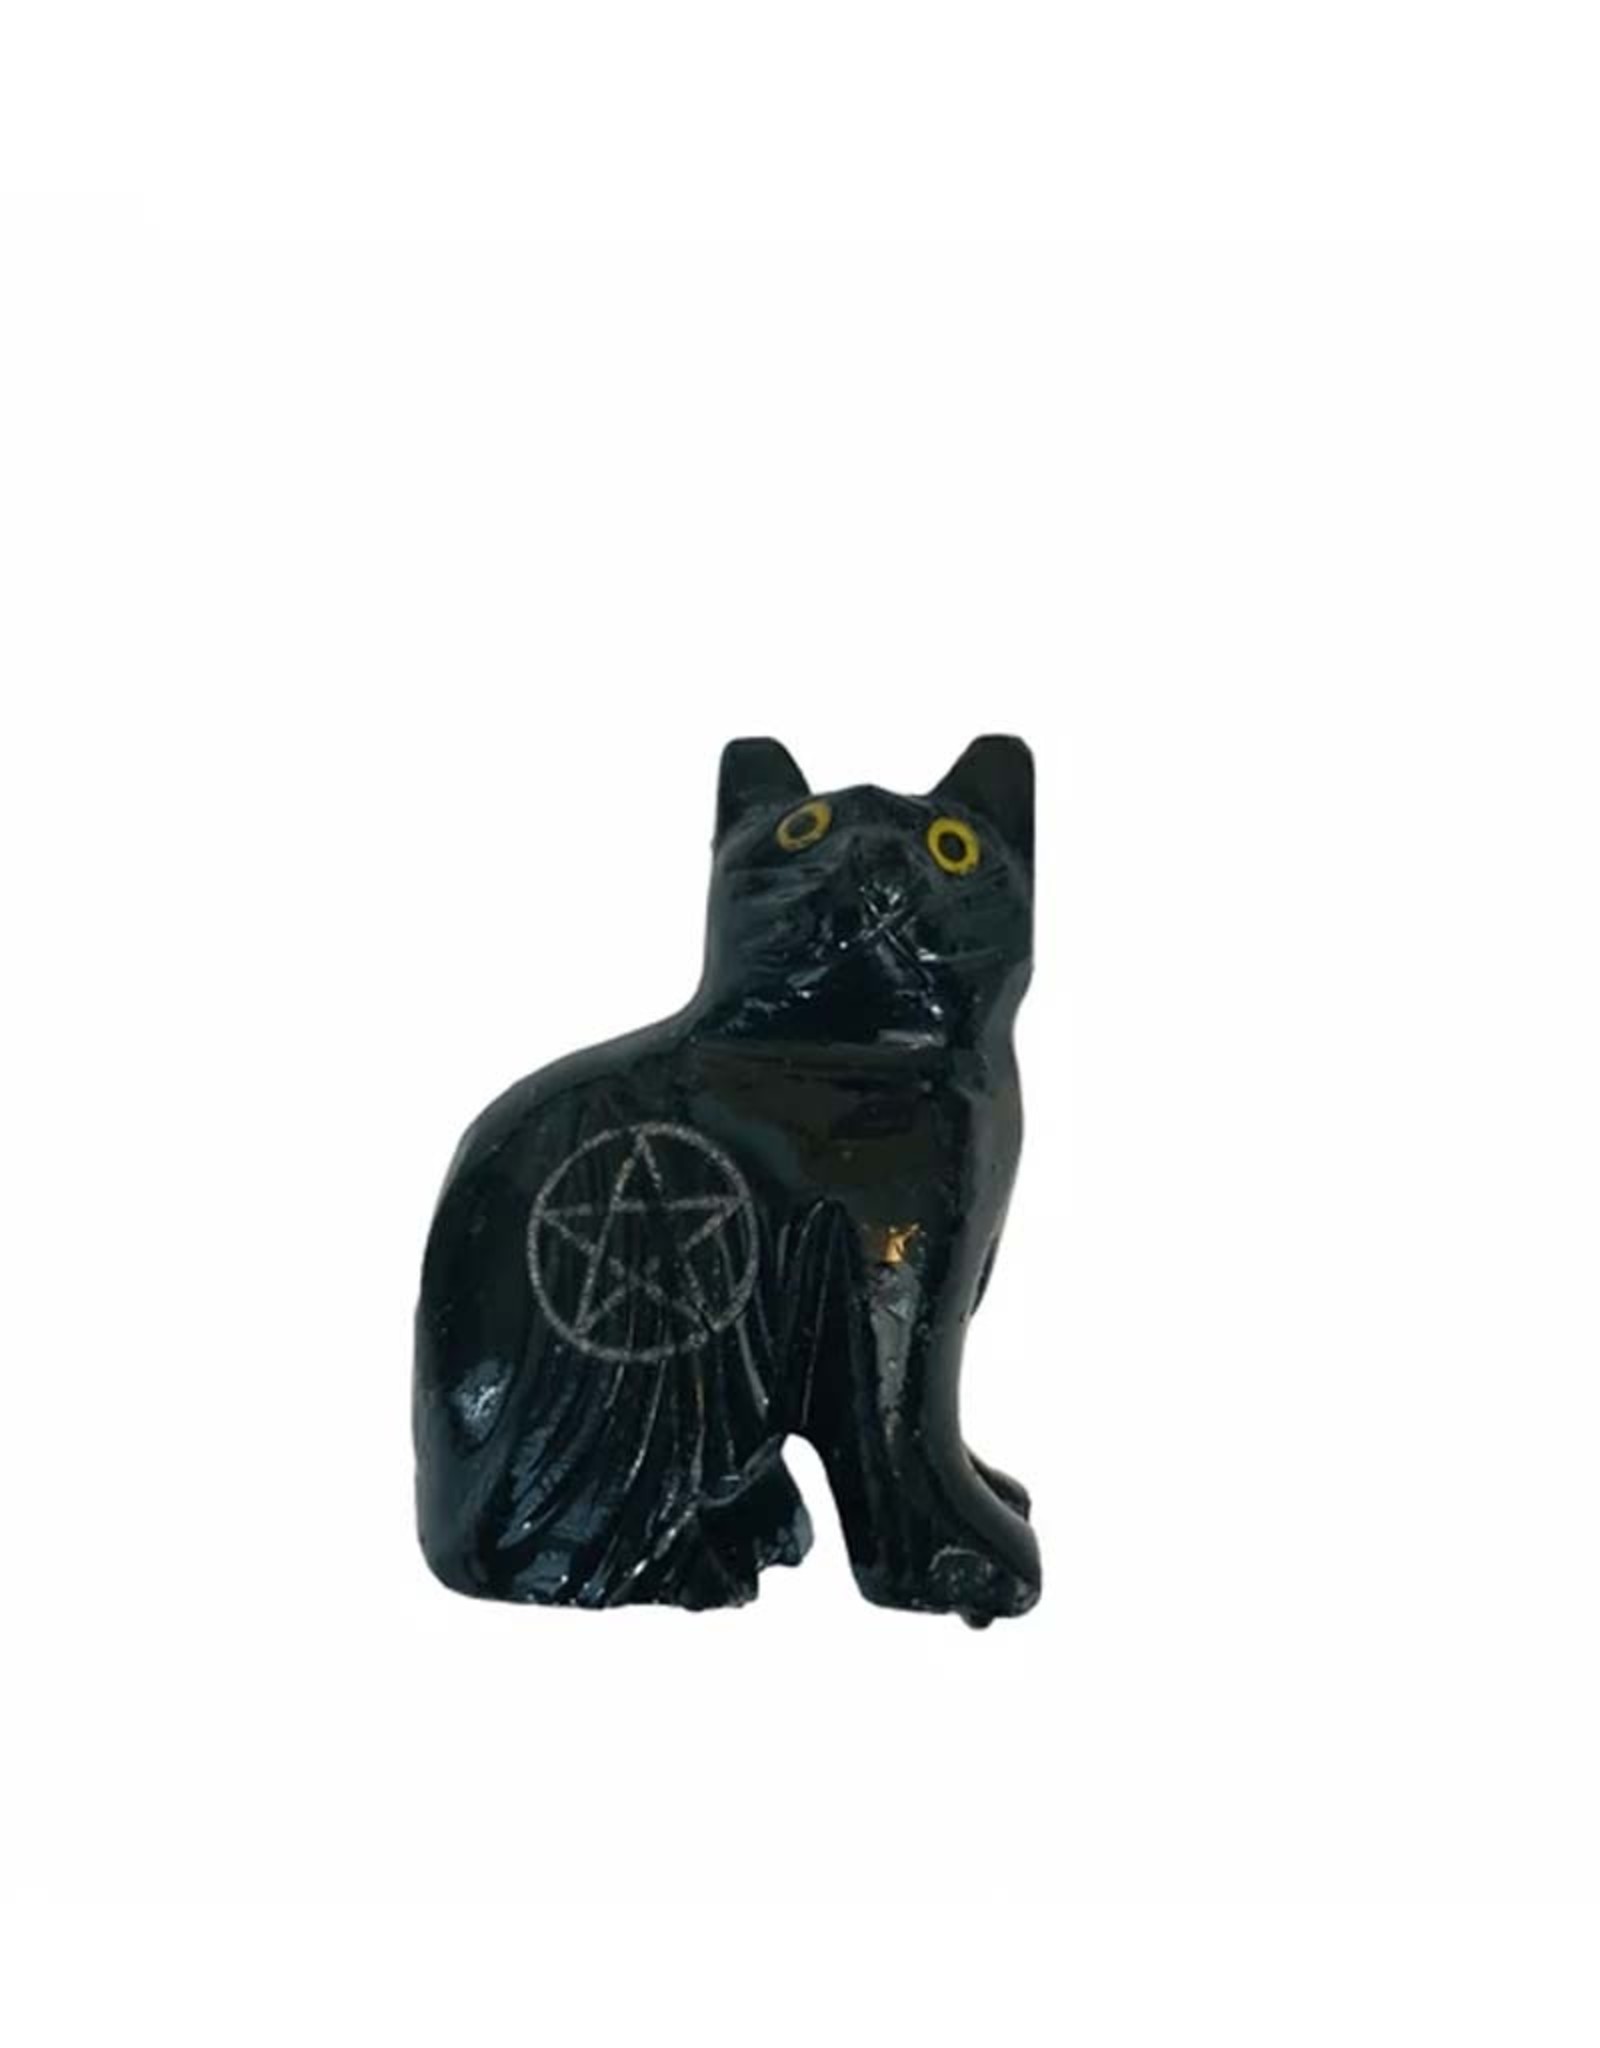 Black Onyx Cat w/ Pentacle - 1.5"